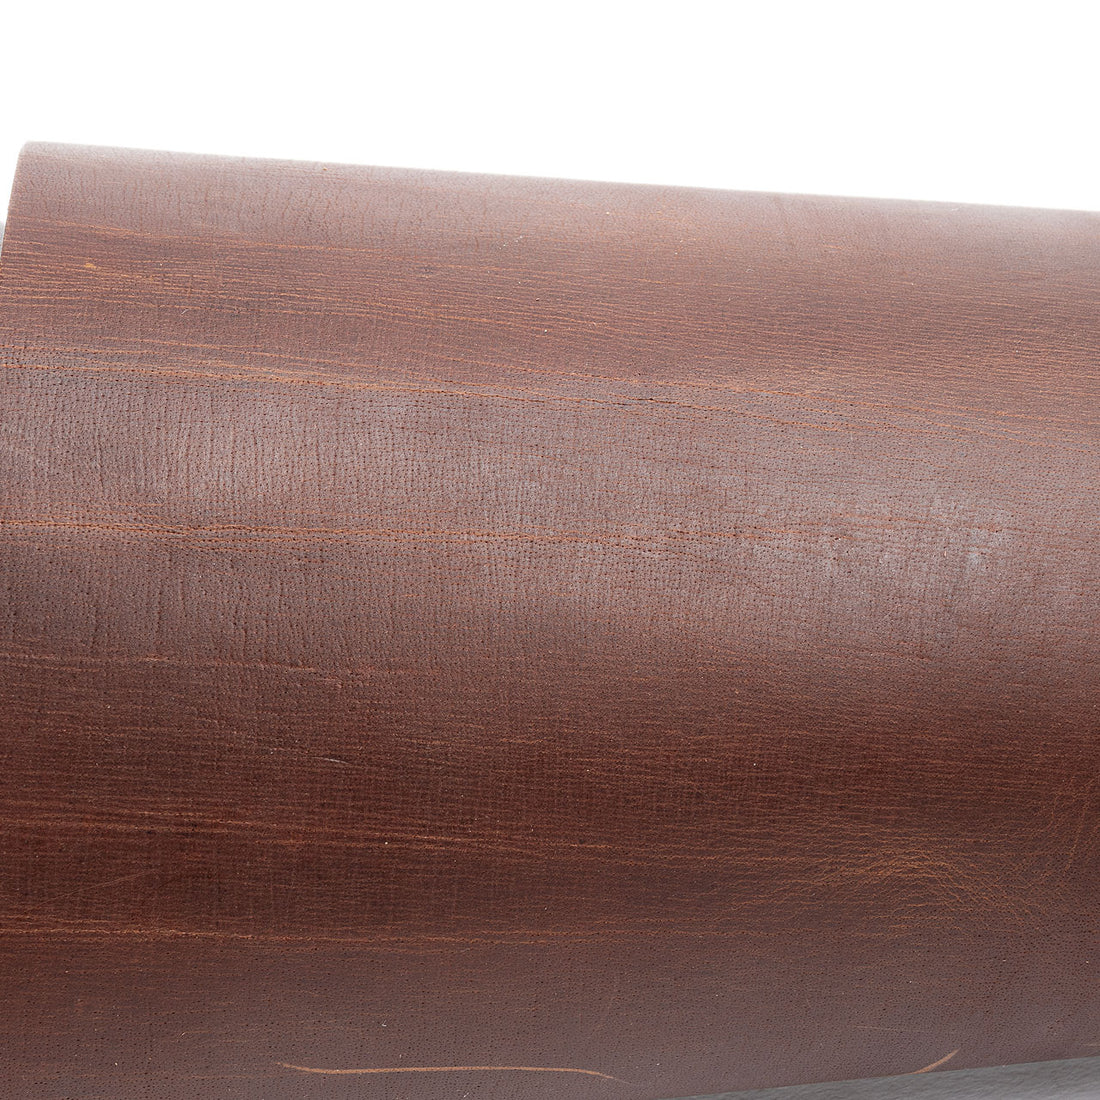 Brown pullup semi-hard veg tanned leather- Pre cut